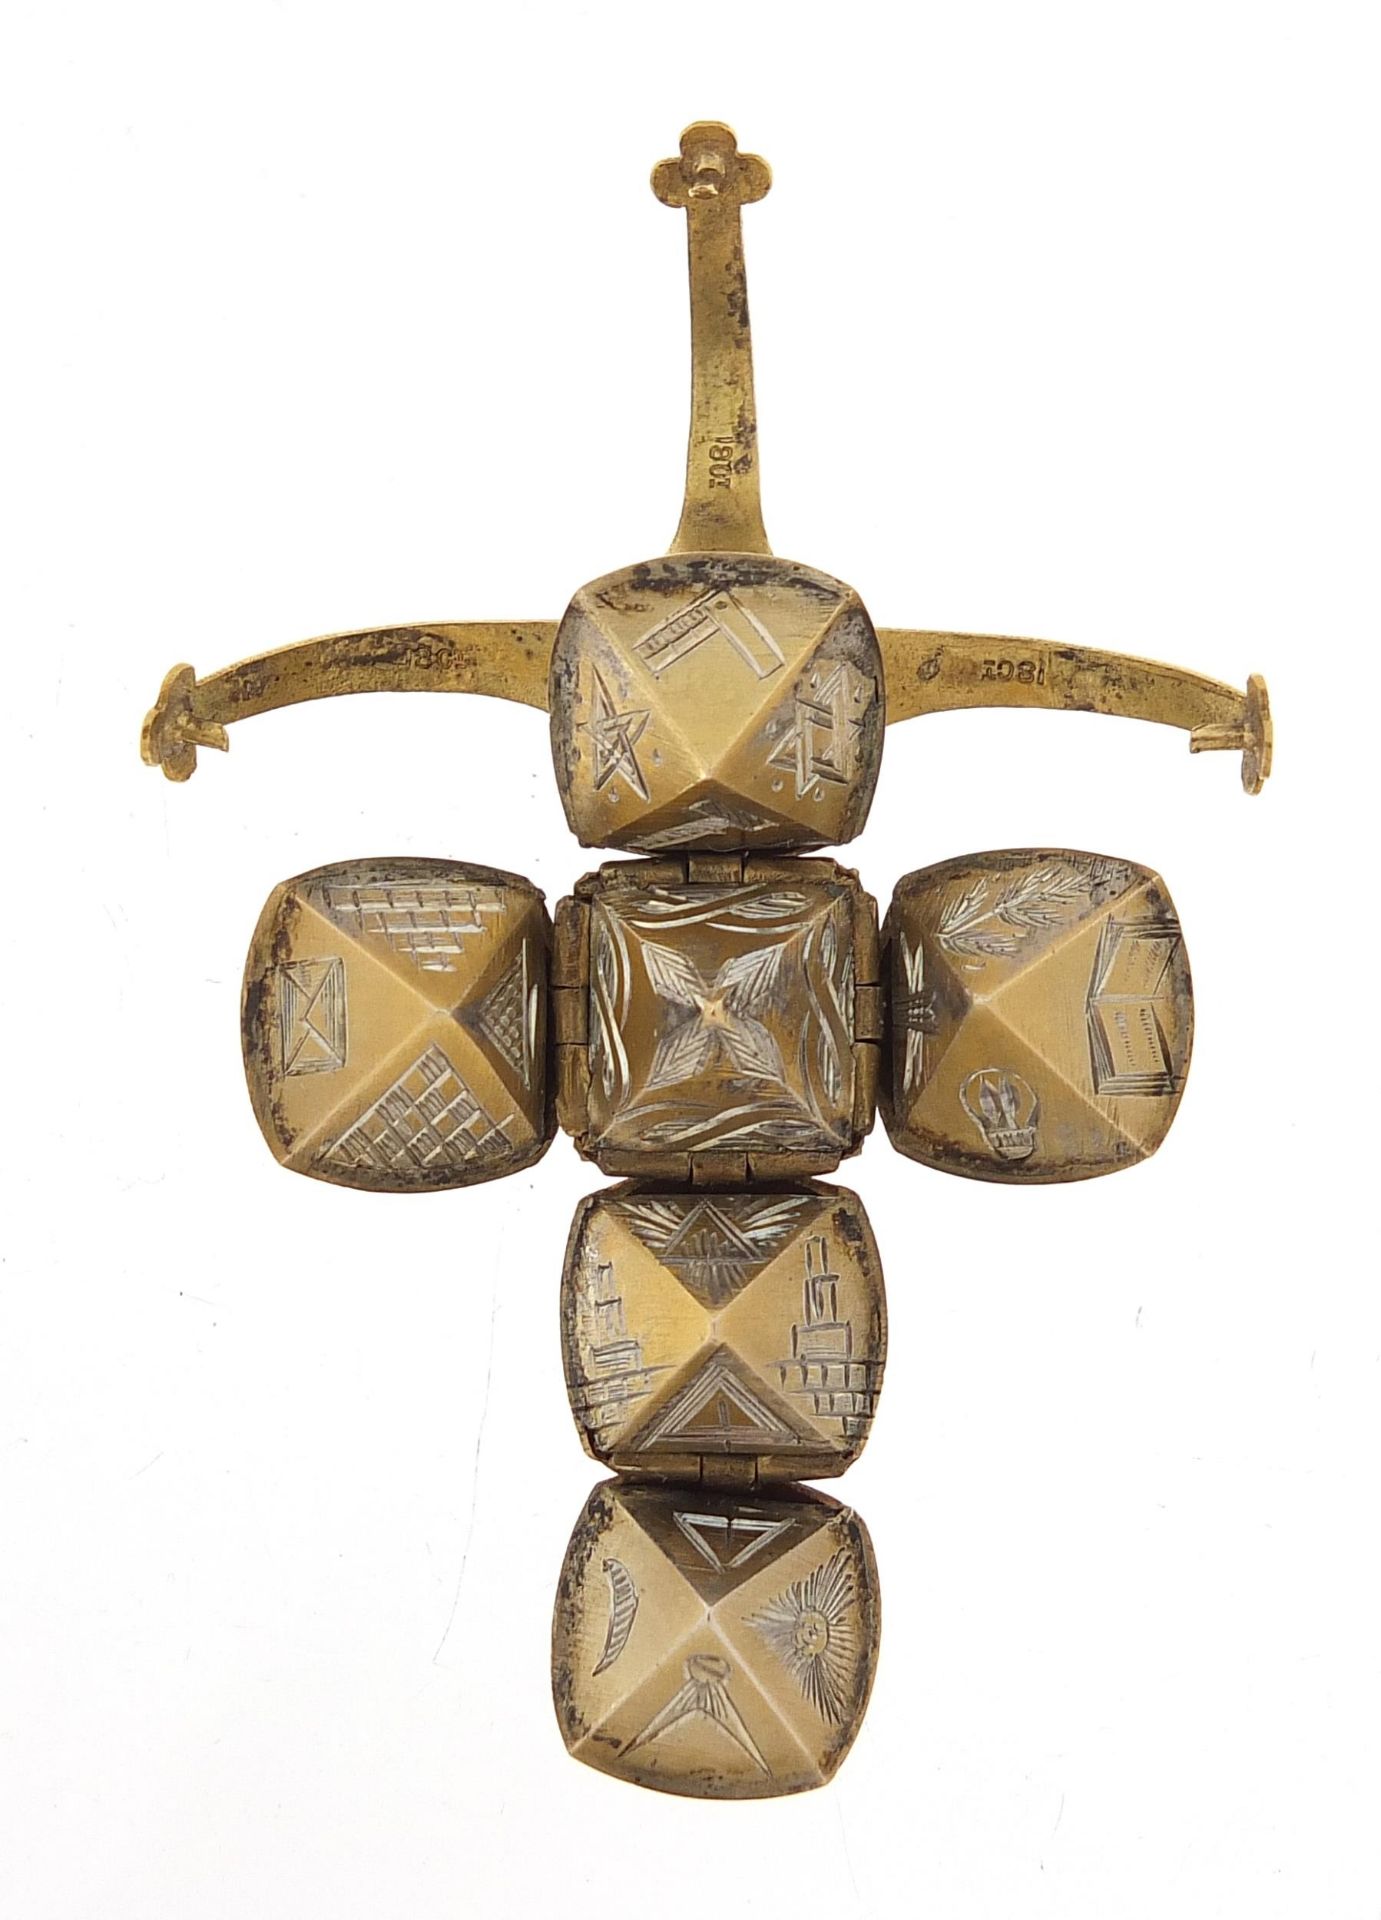 18ct gold cased silver folding masonic ball pendant, 4.4cm high when open, 13.8g